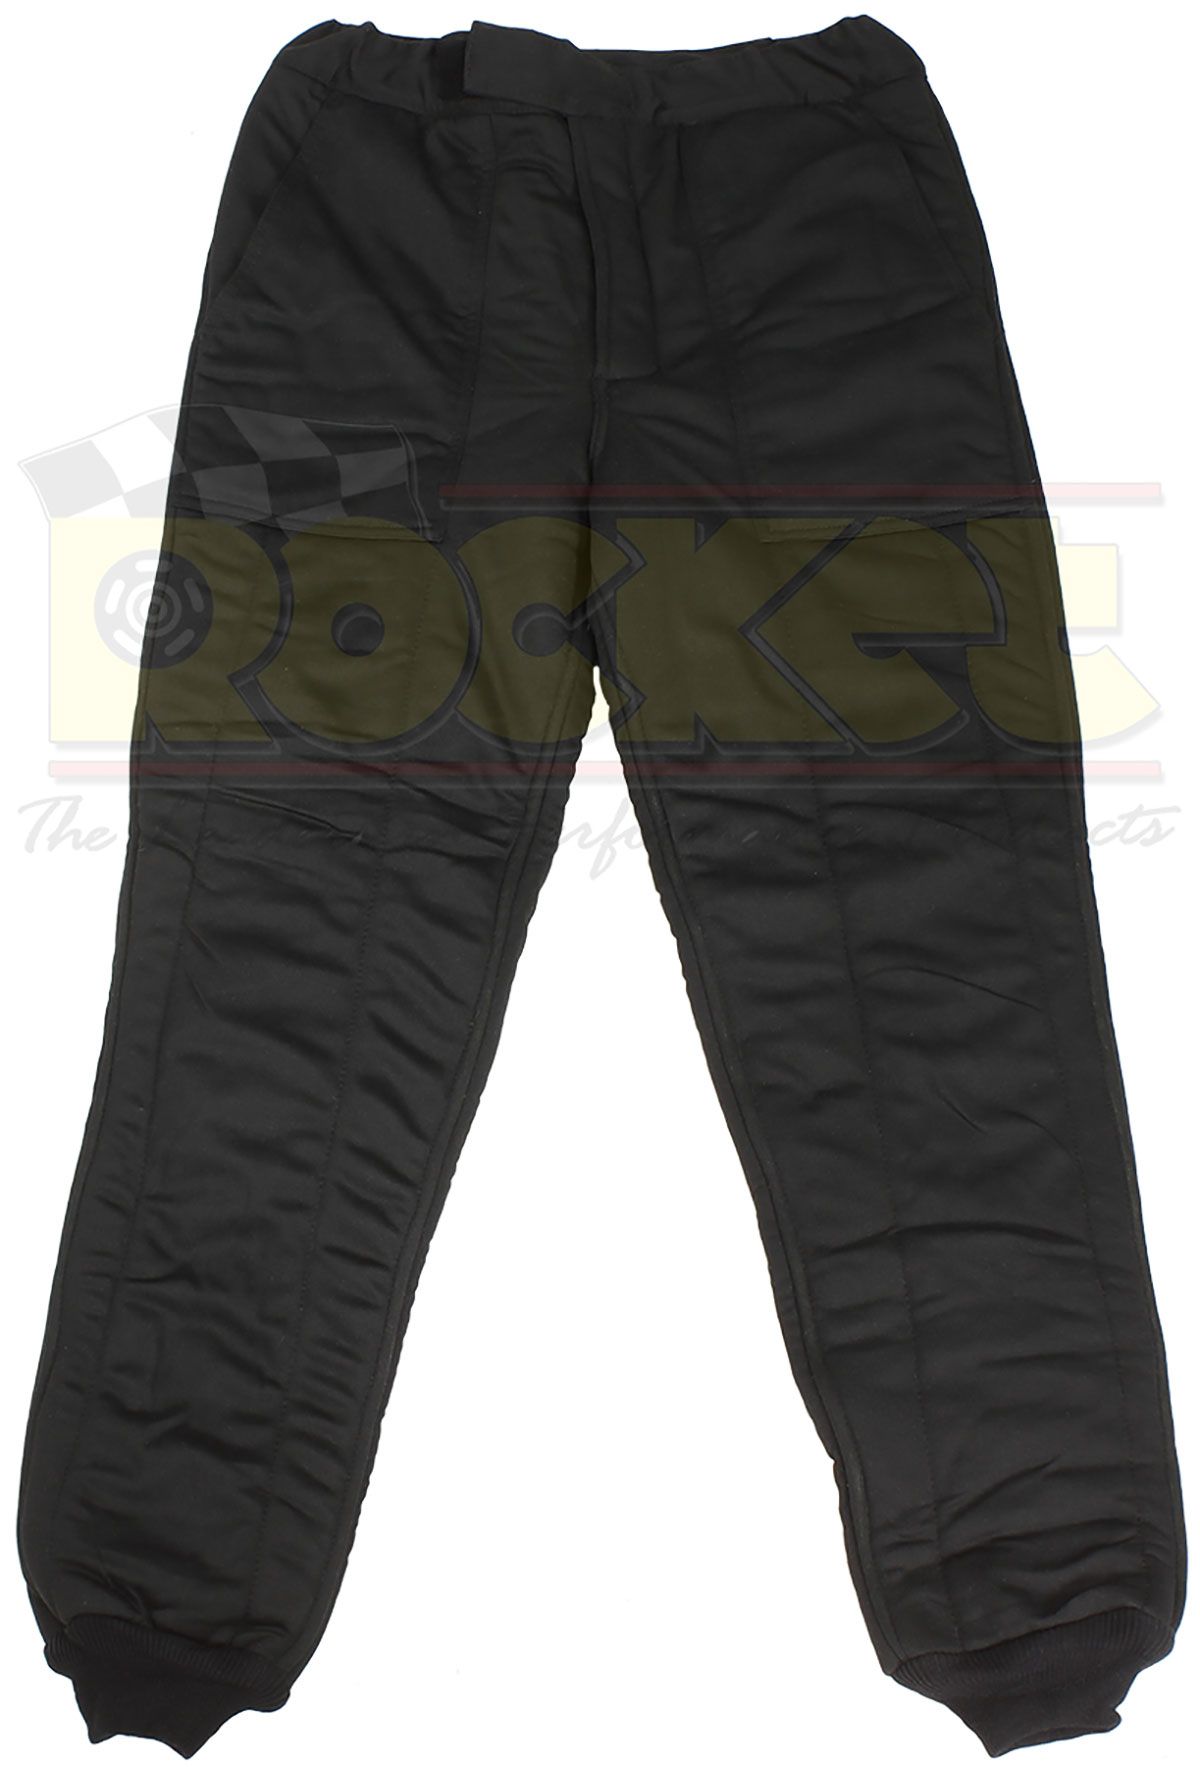 SI4802433 - SFI-20 BLACK PANTS X LARGE